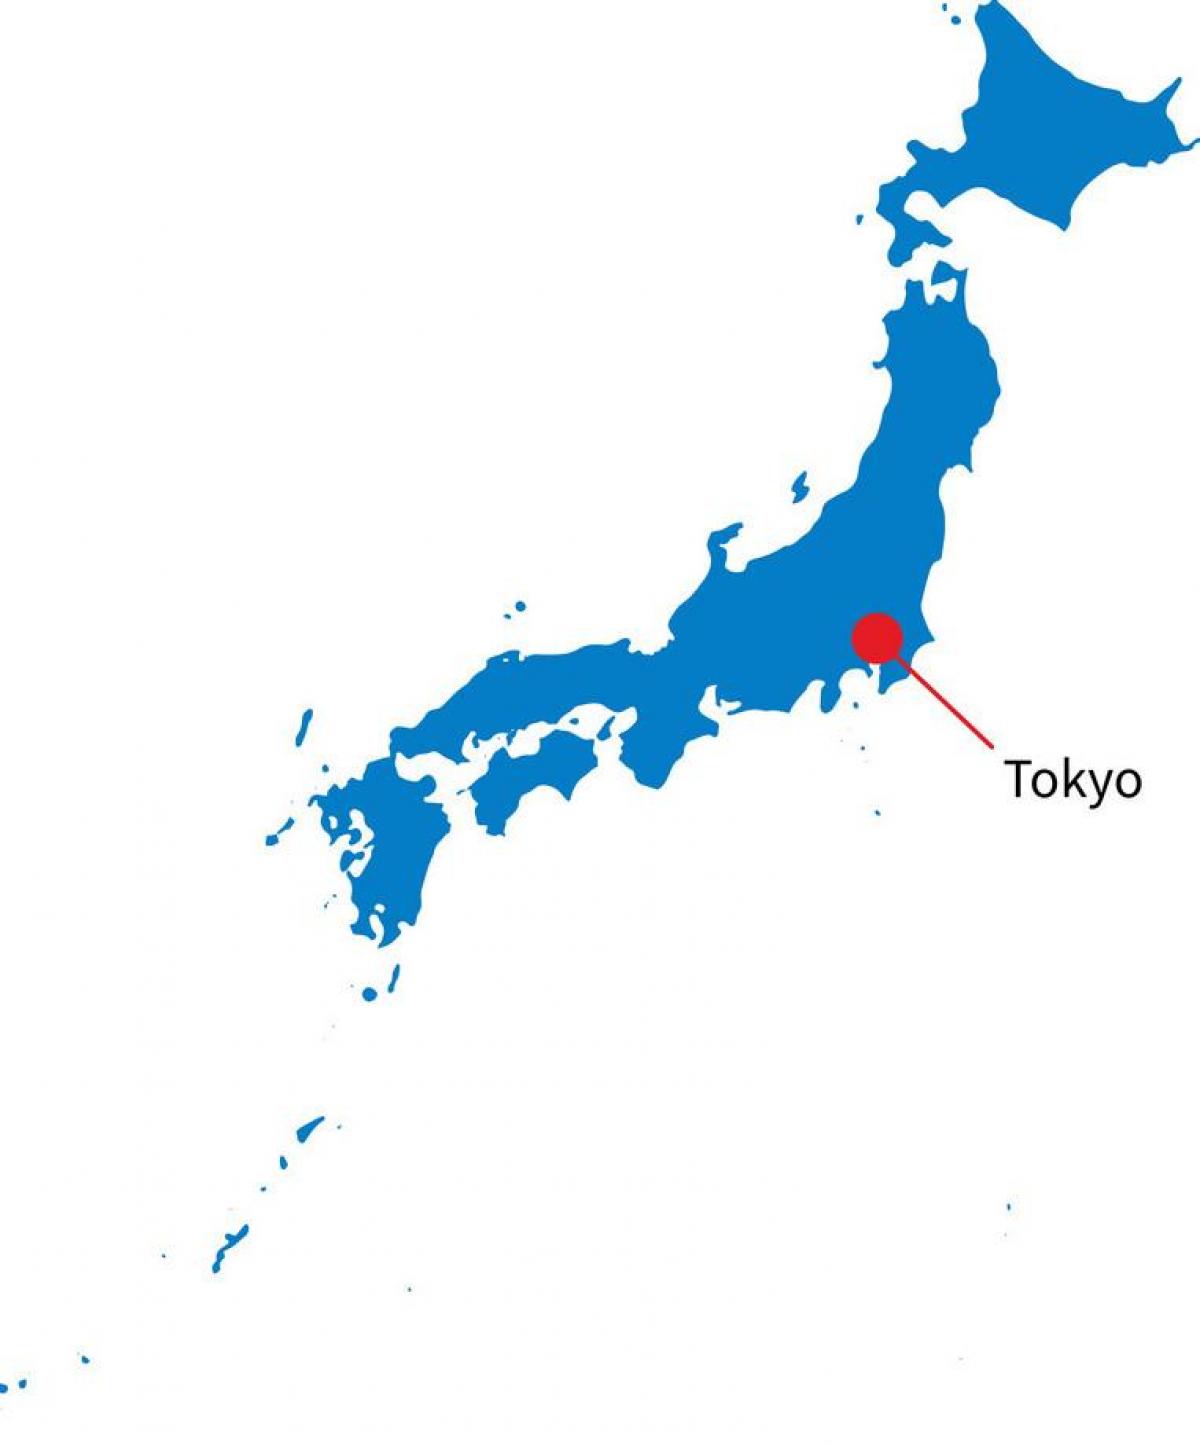 Tokyo on Japan map